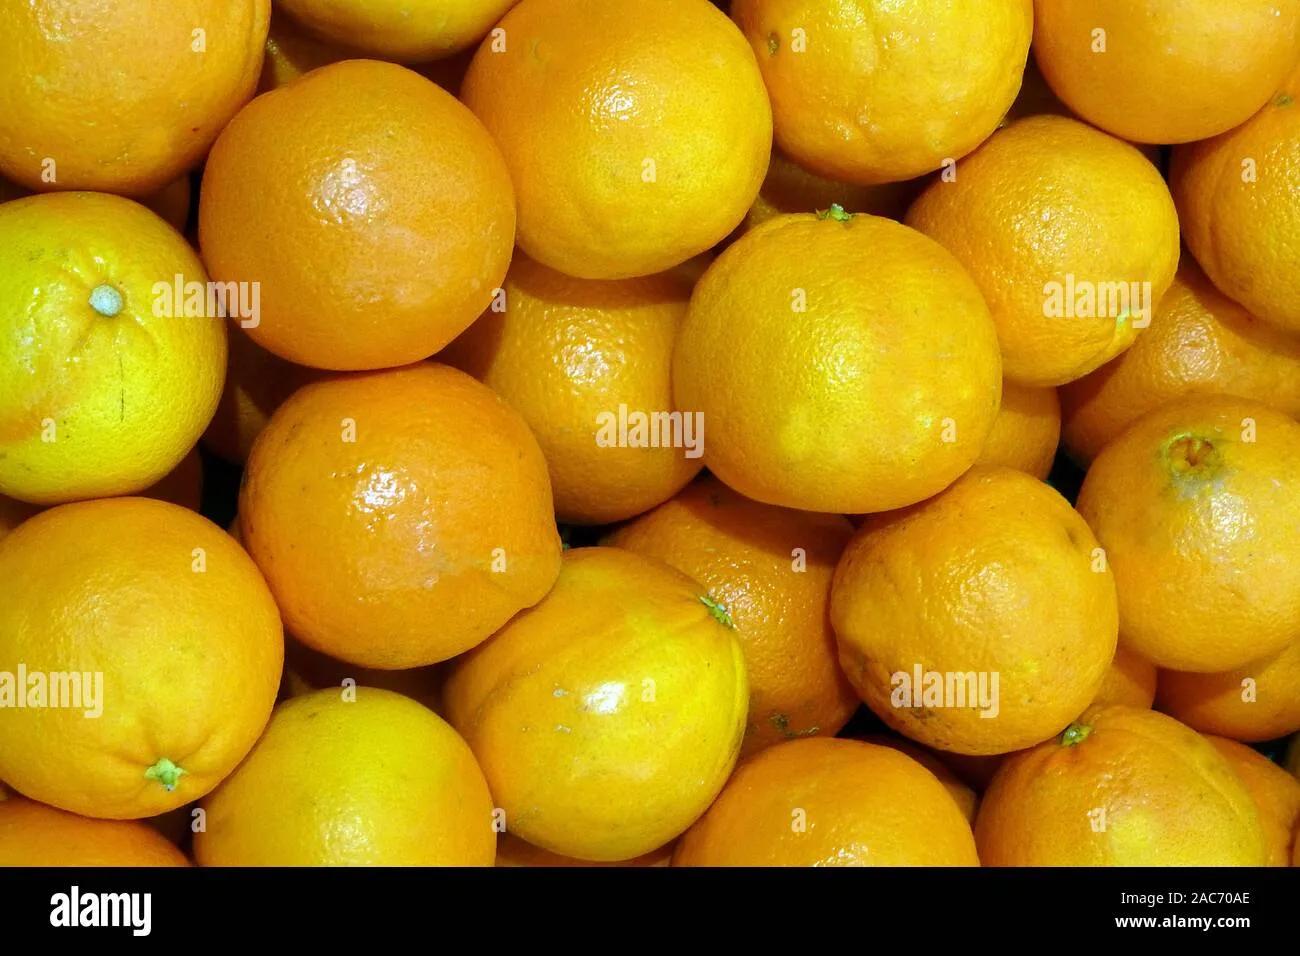 Orangen - Apfelsinen Stock Photo - Alamy